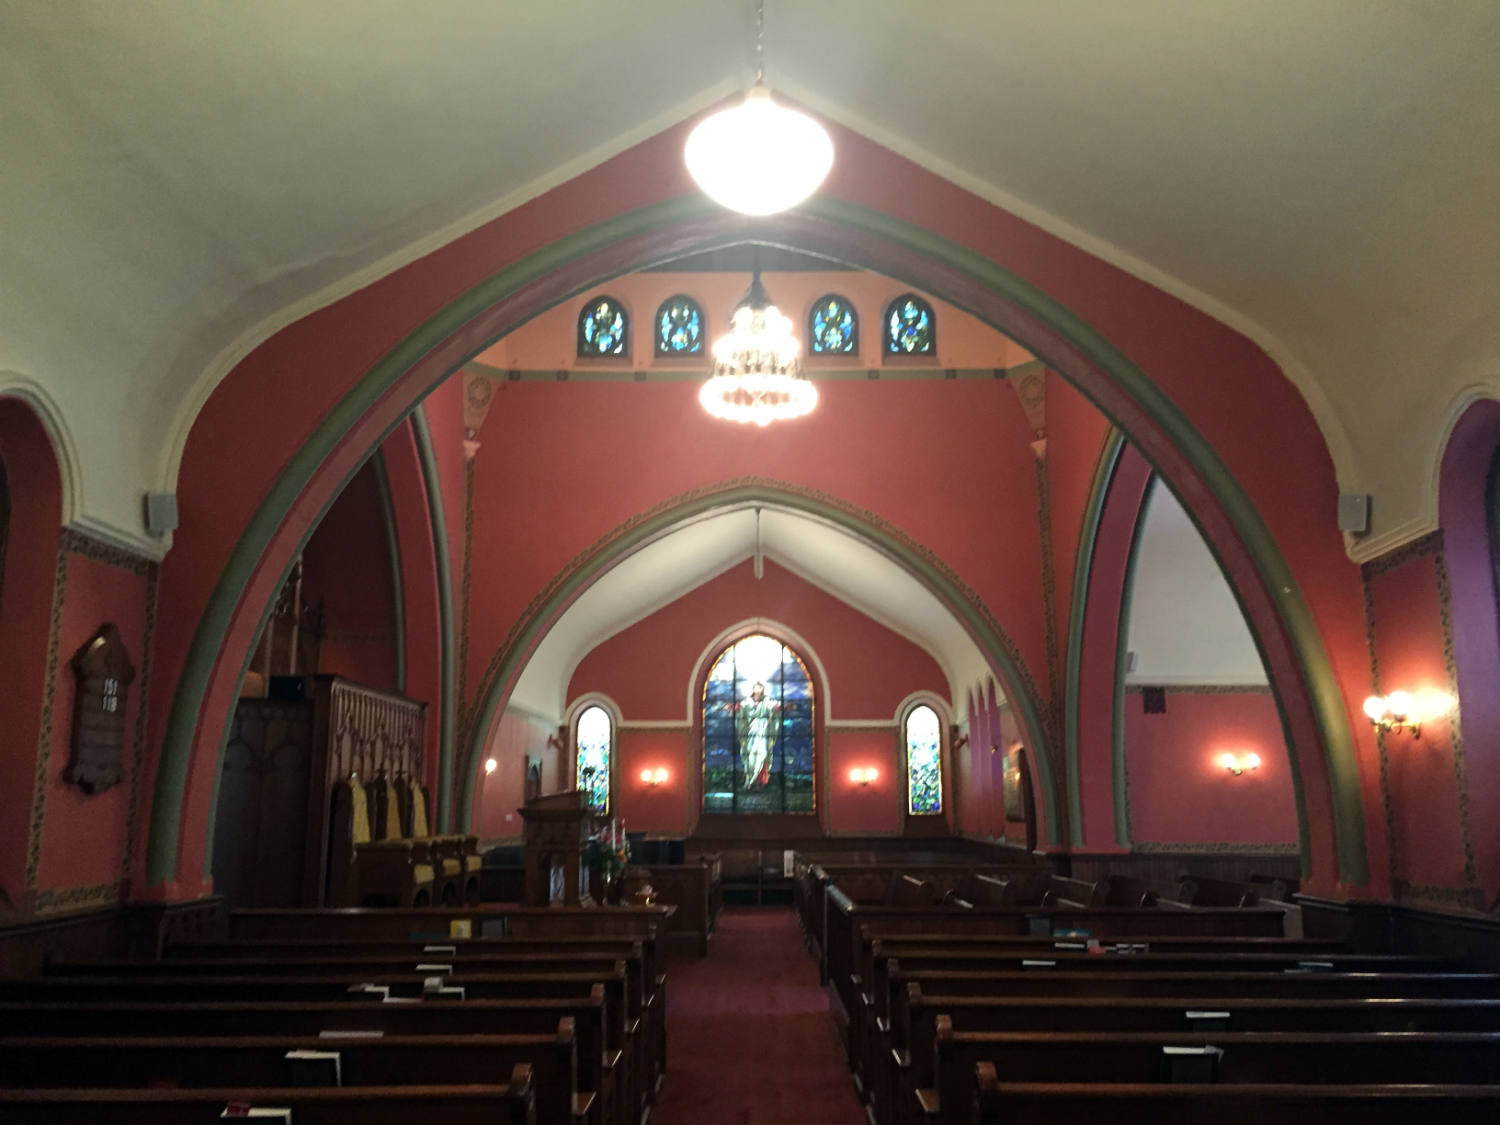 Sanctuary Inside the Pullman Memorial Universalist Church in Albion